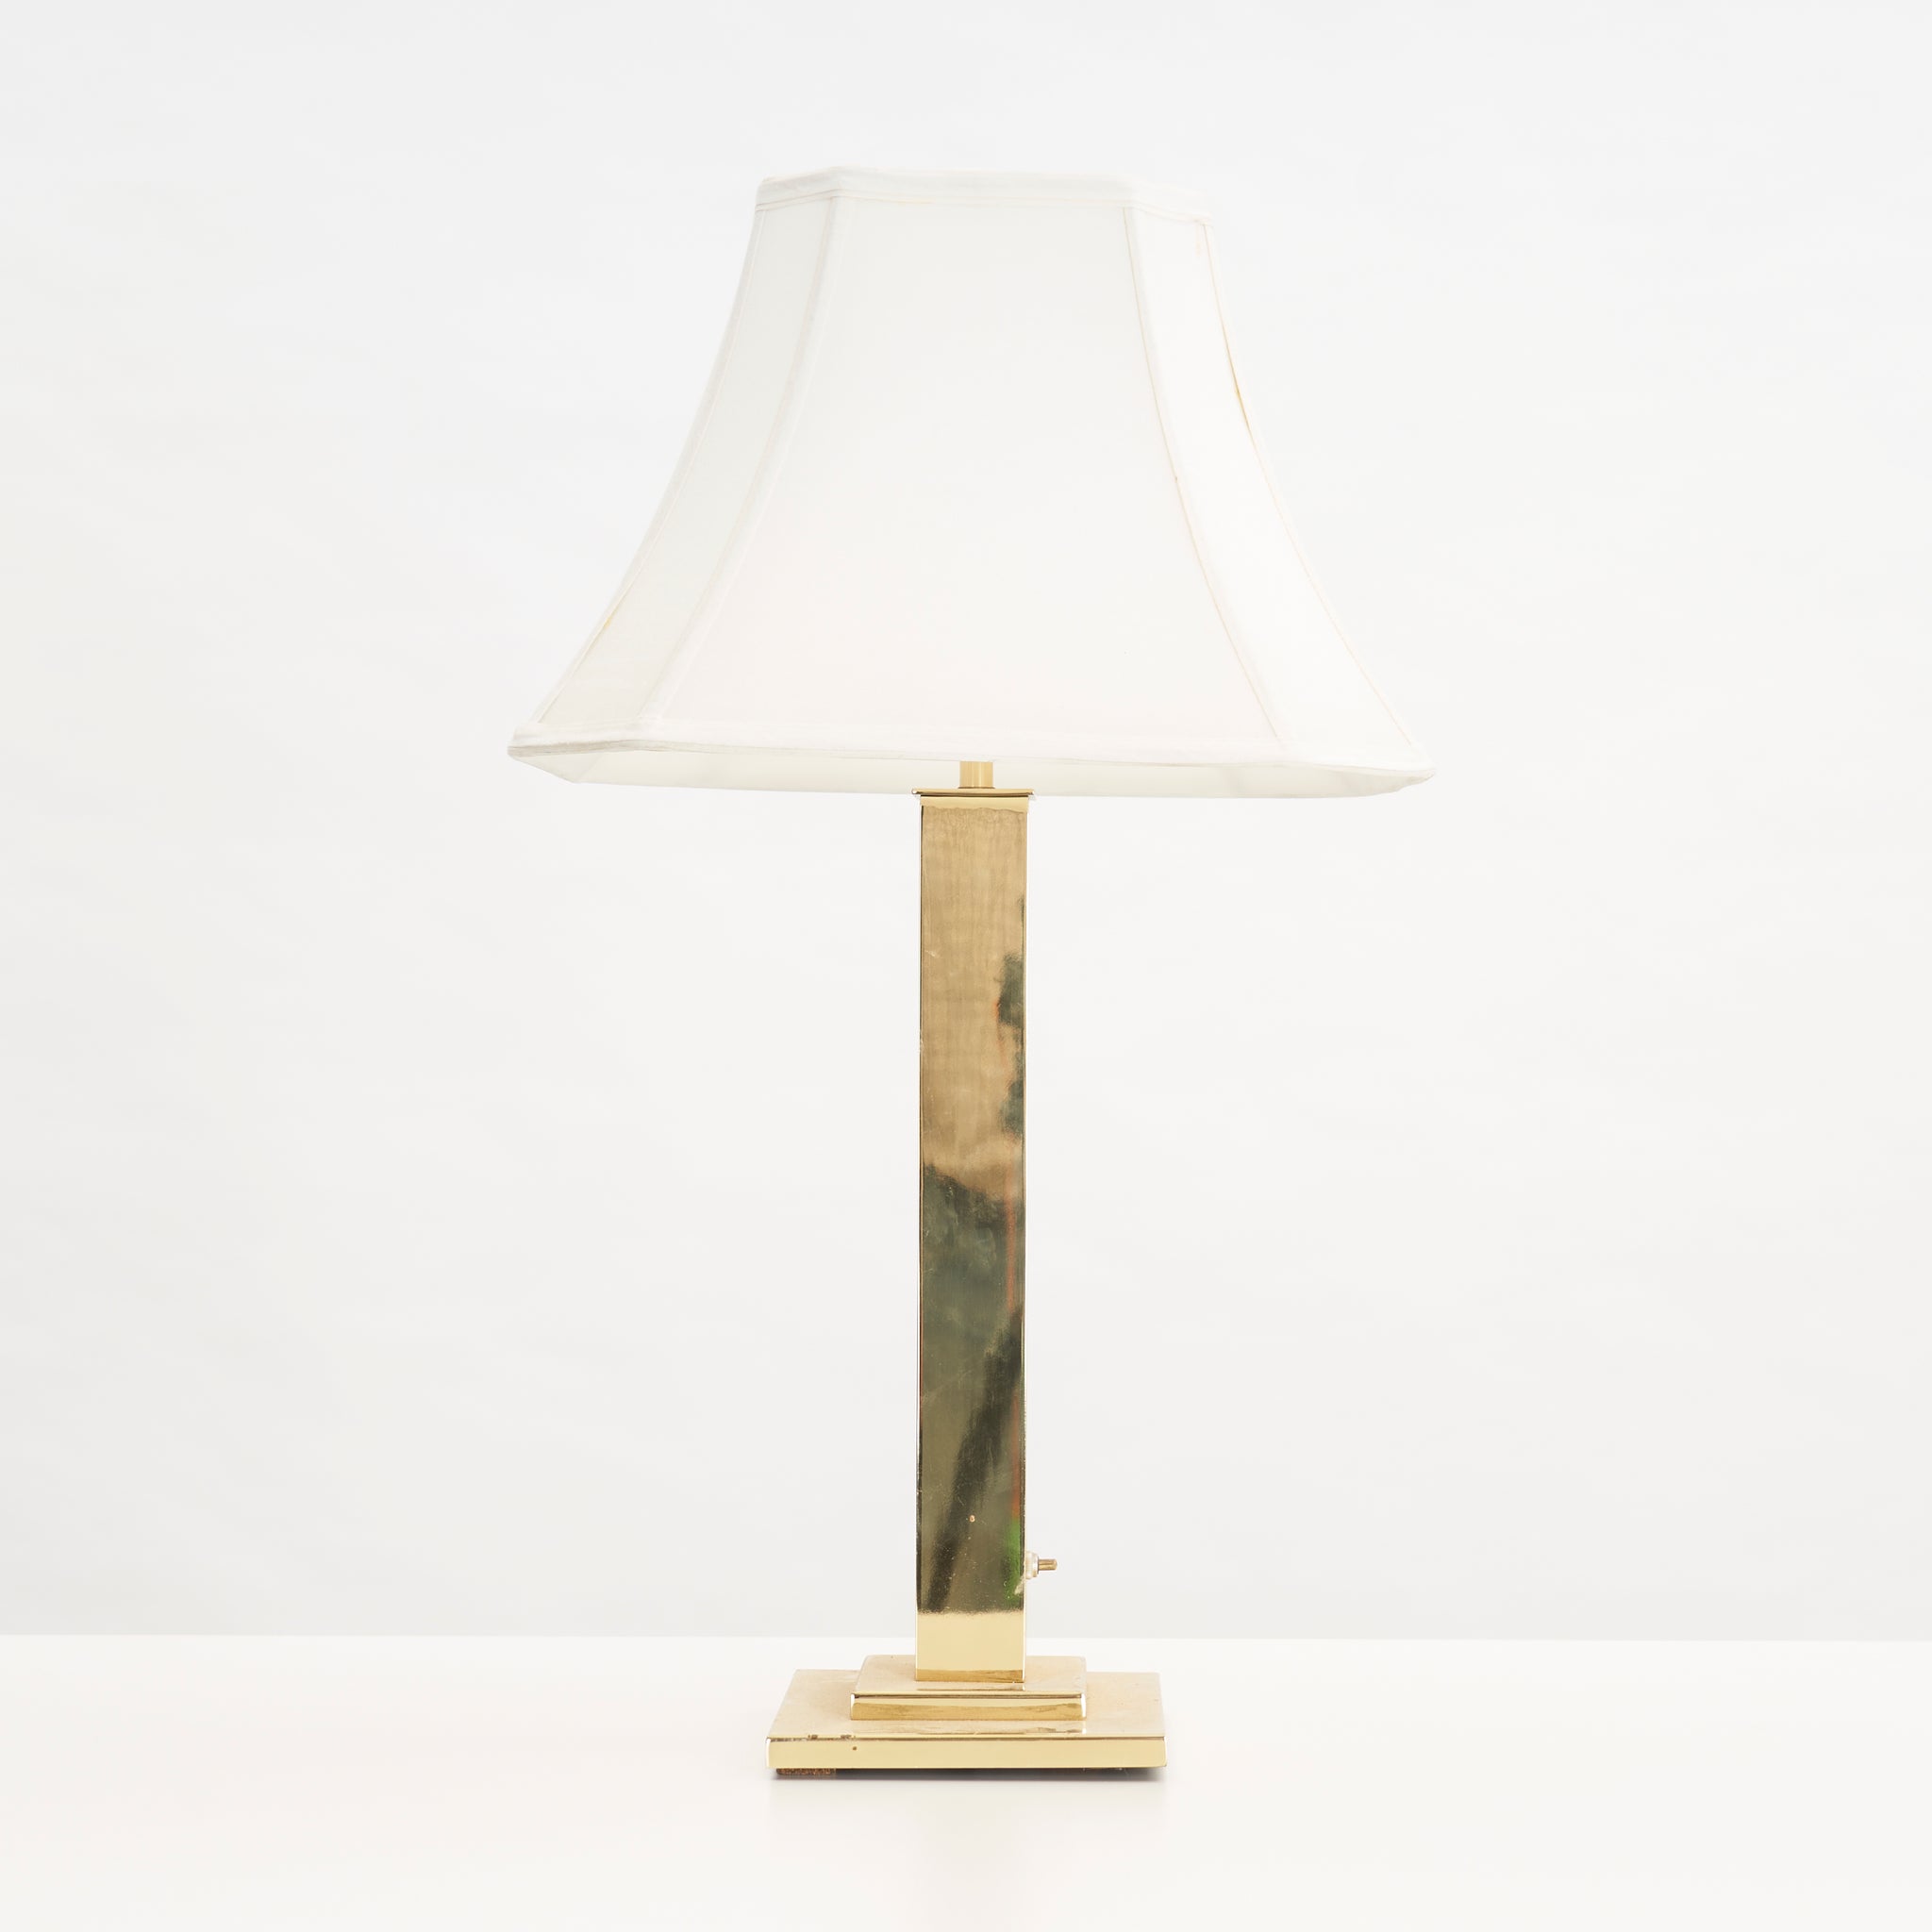 Nessen Brass Table Lamp